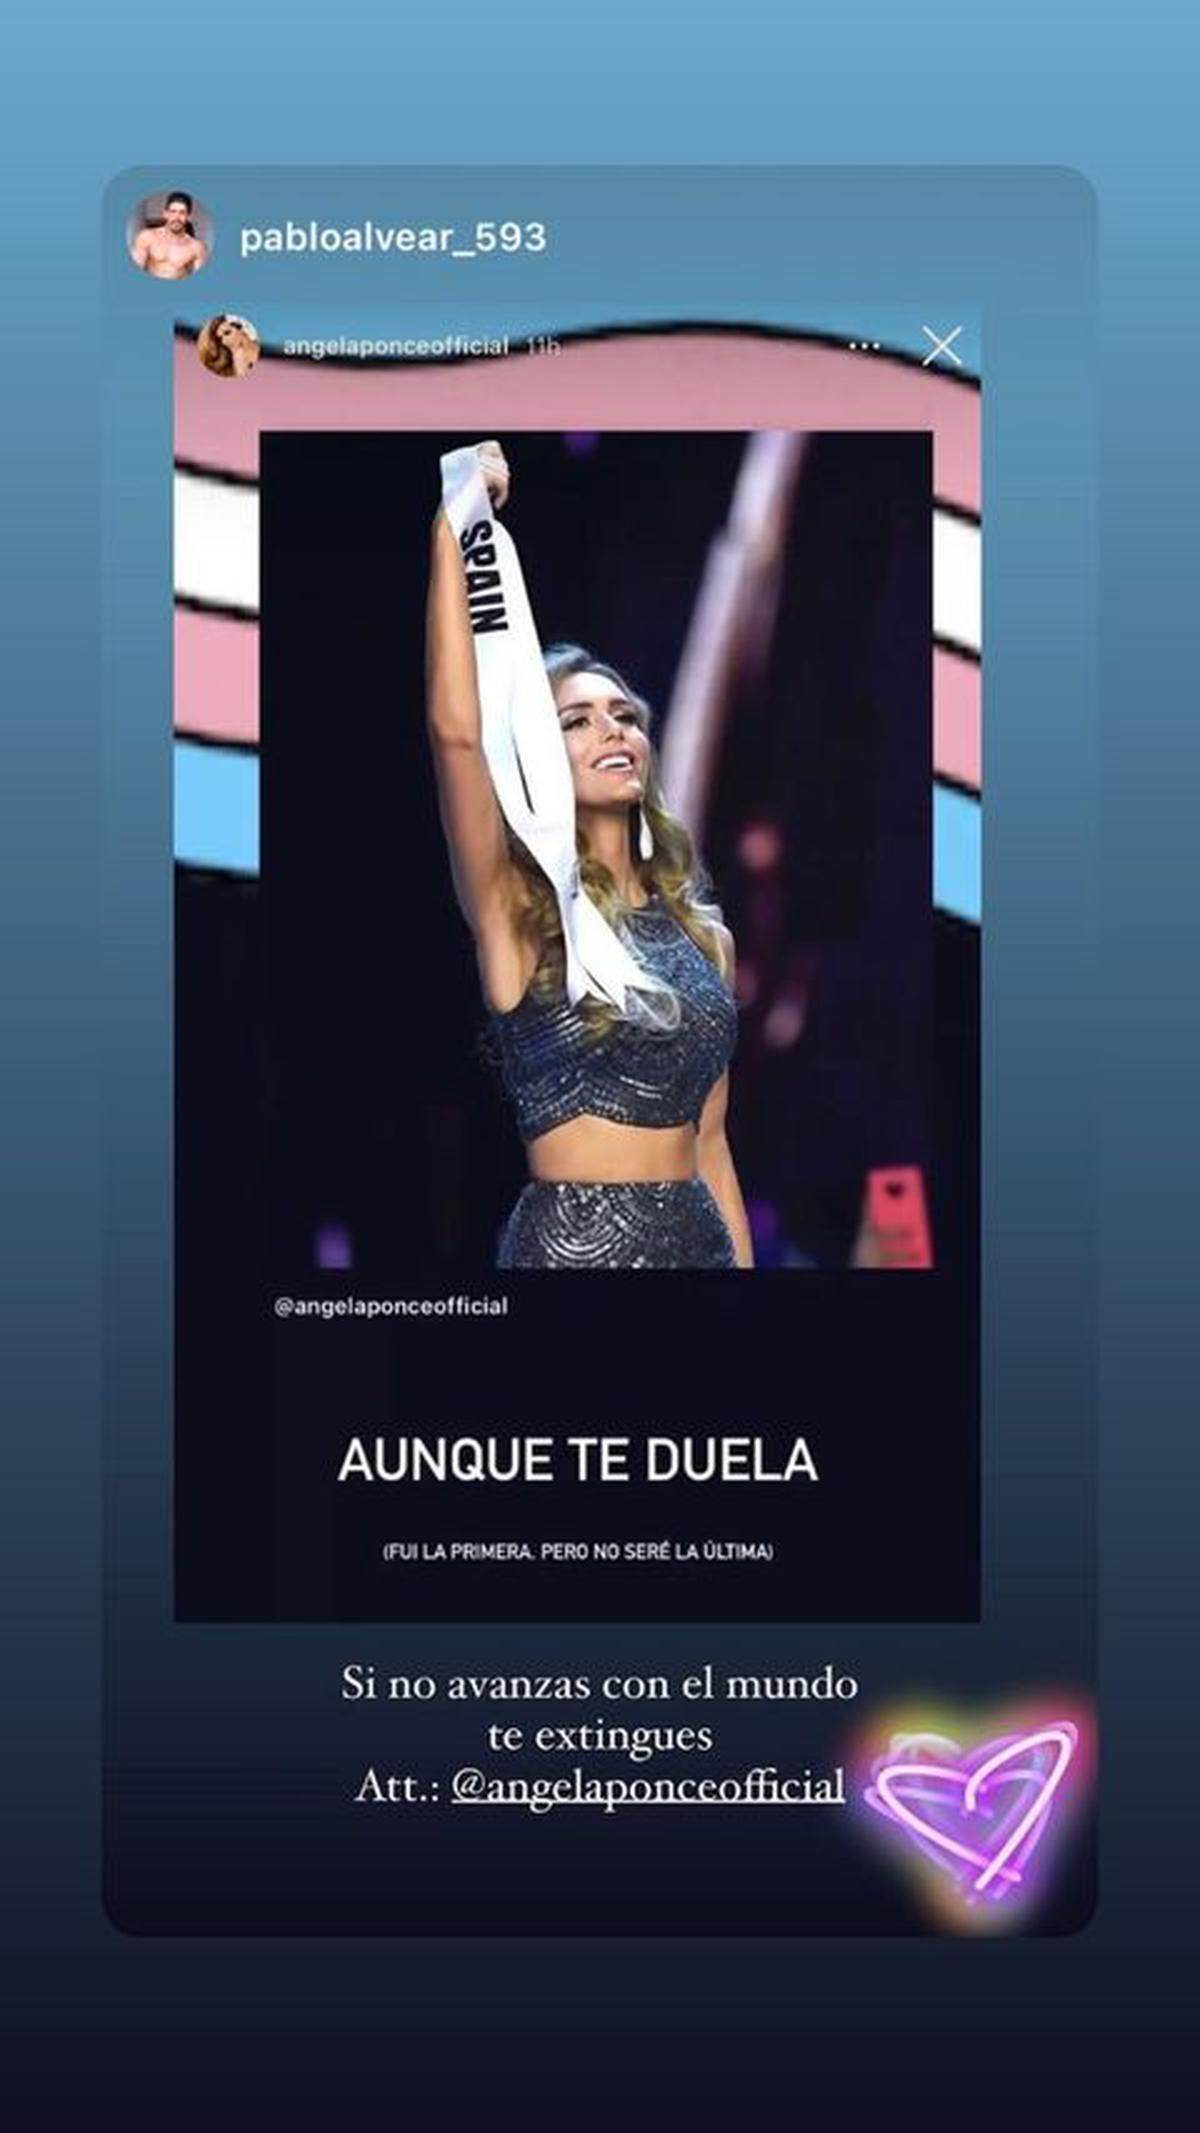  | "Aunque te duela": Ángela Ponce, Miss España 2018 llama a Lupita Jones transfóbica